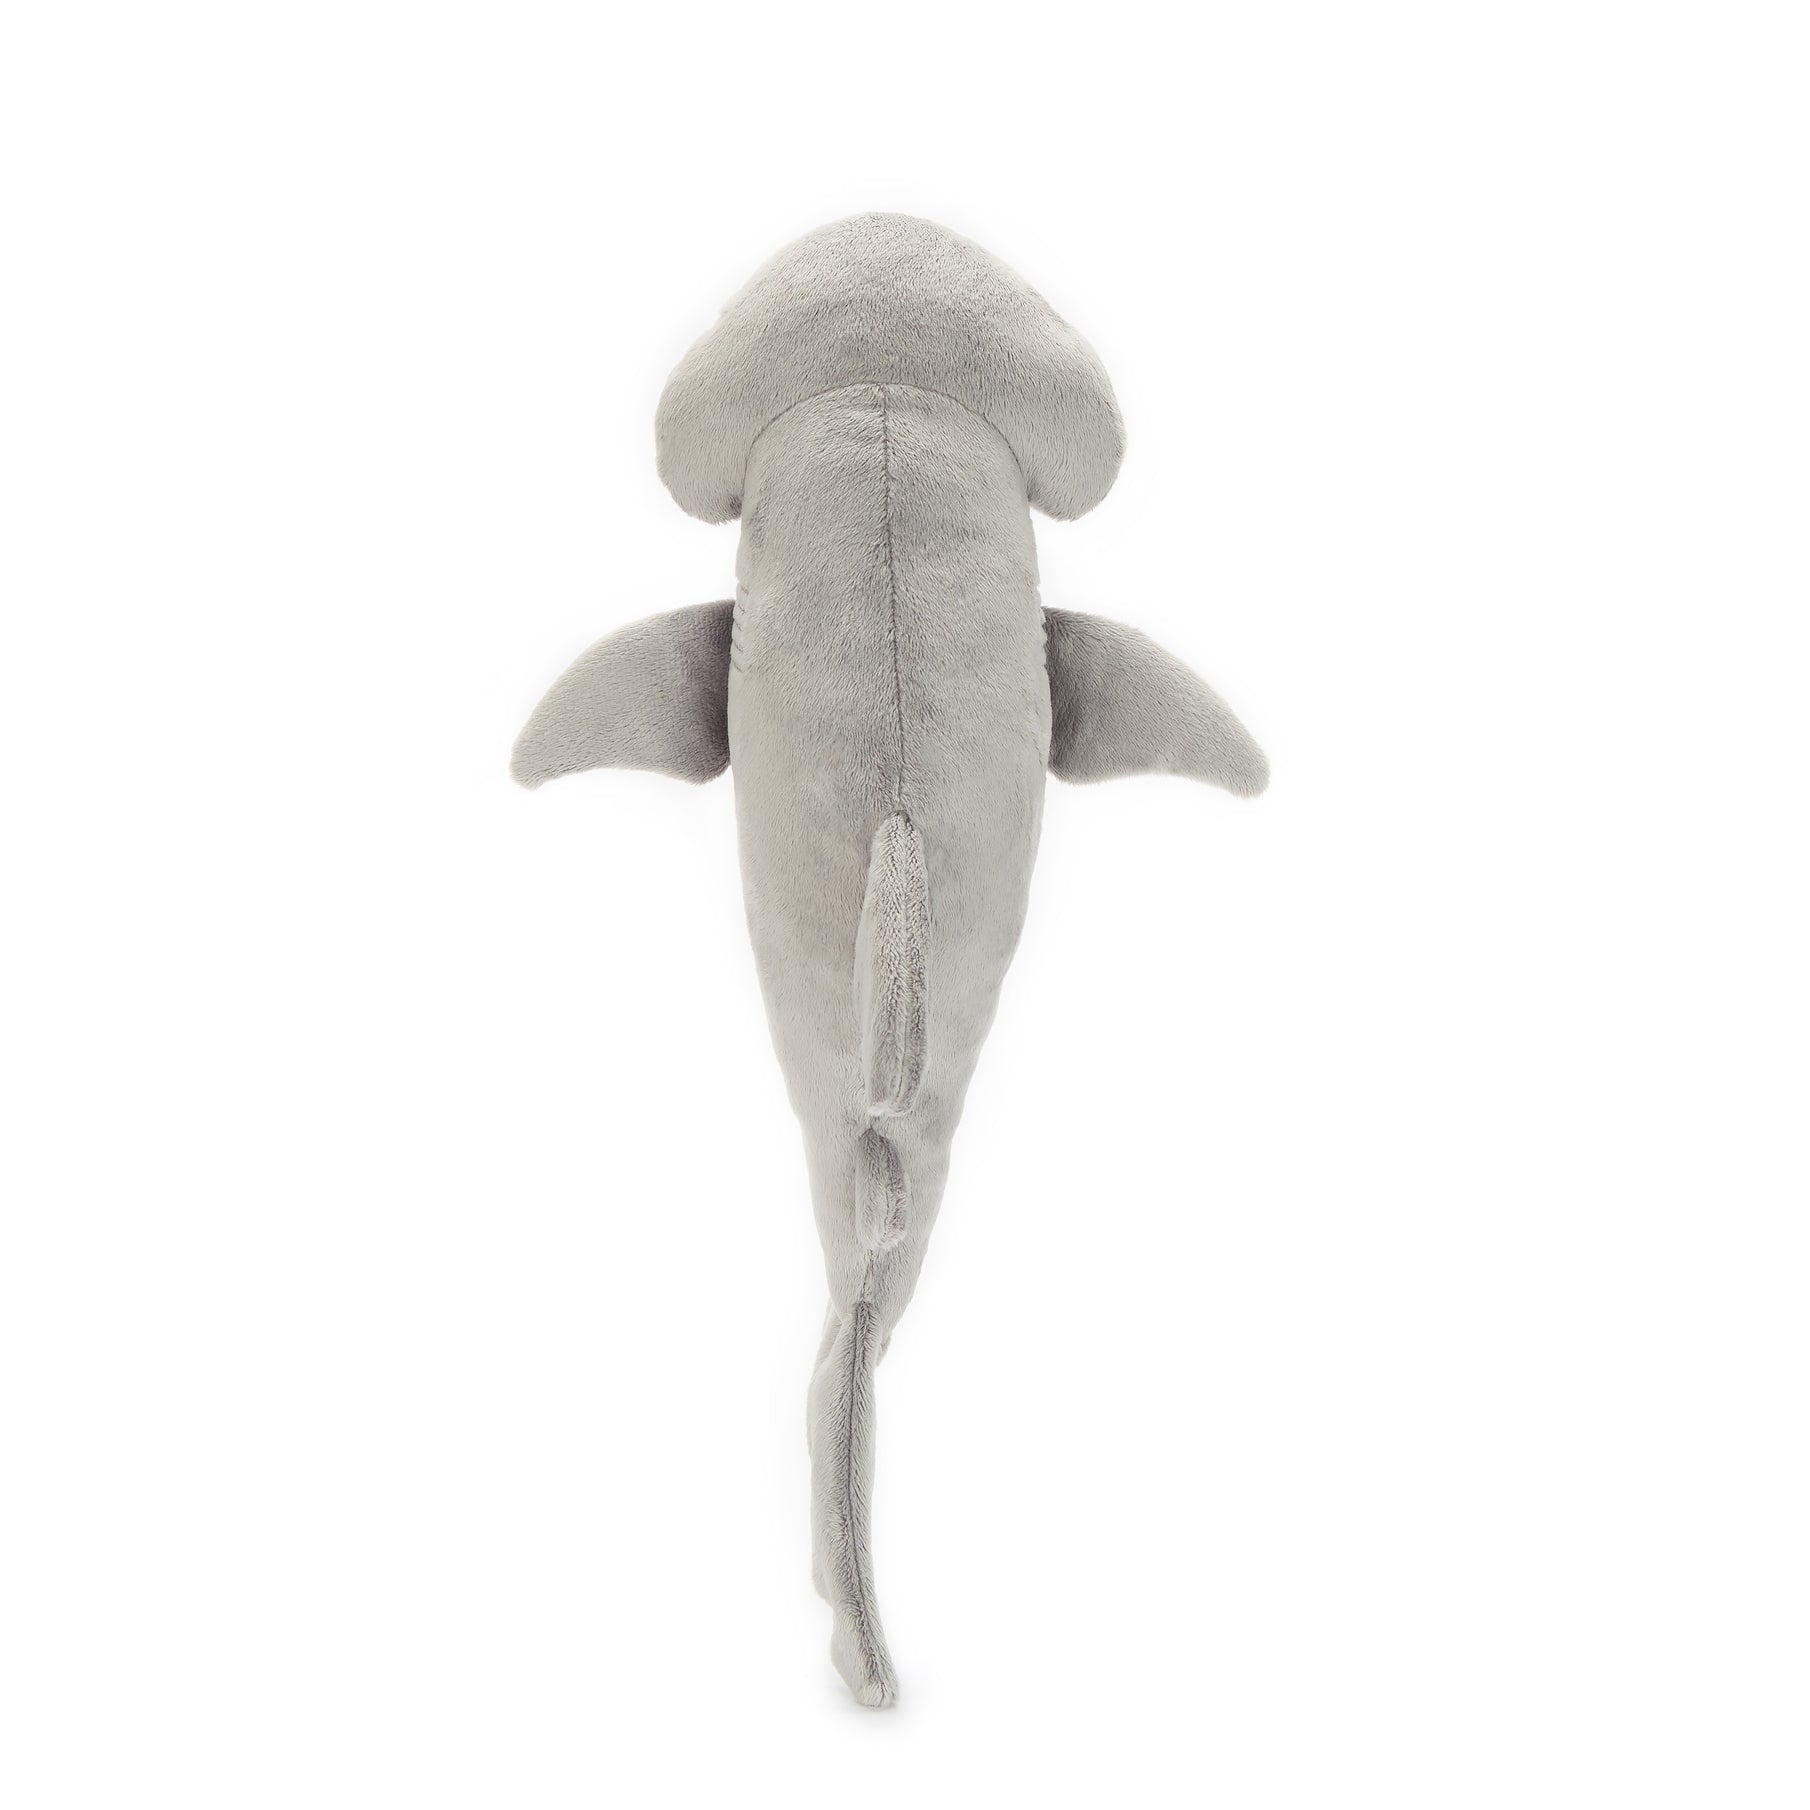 Stuffed Animal - Shark